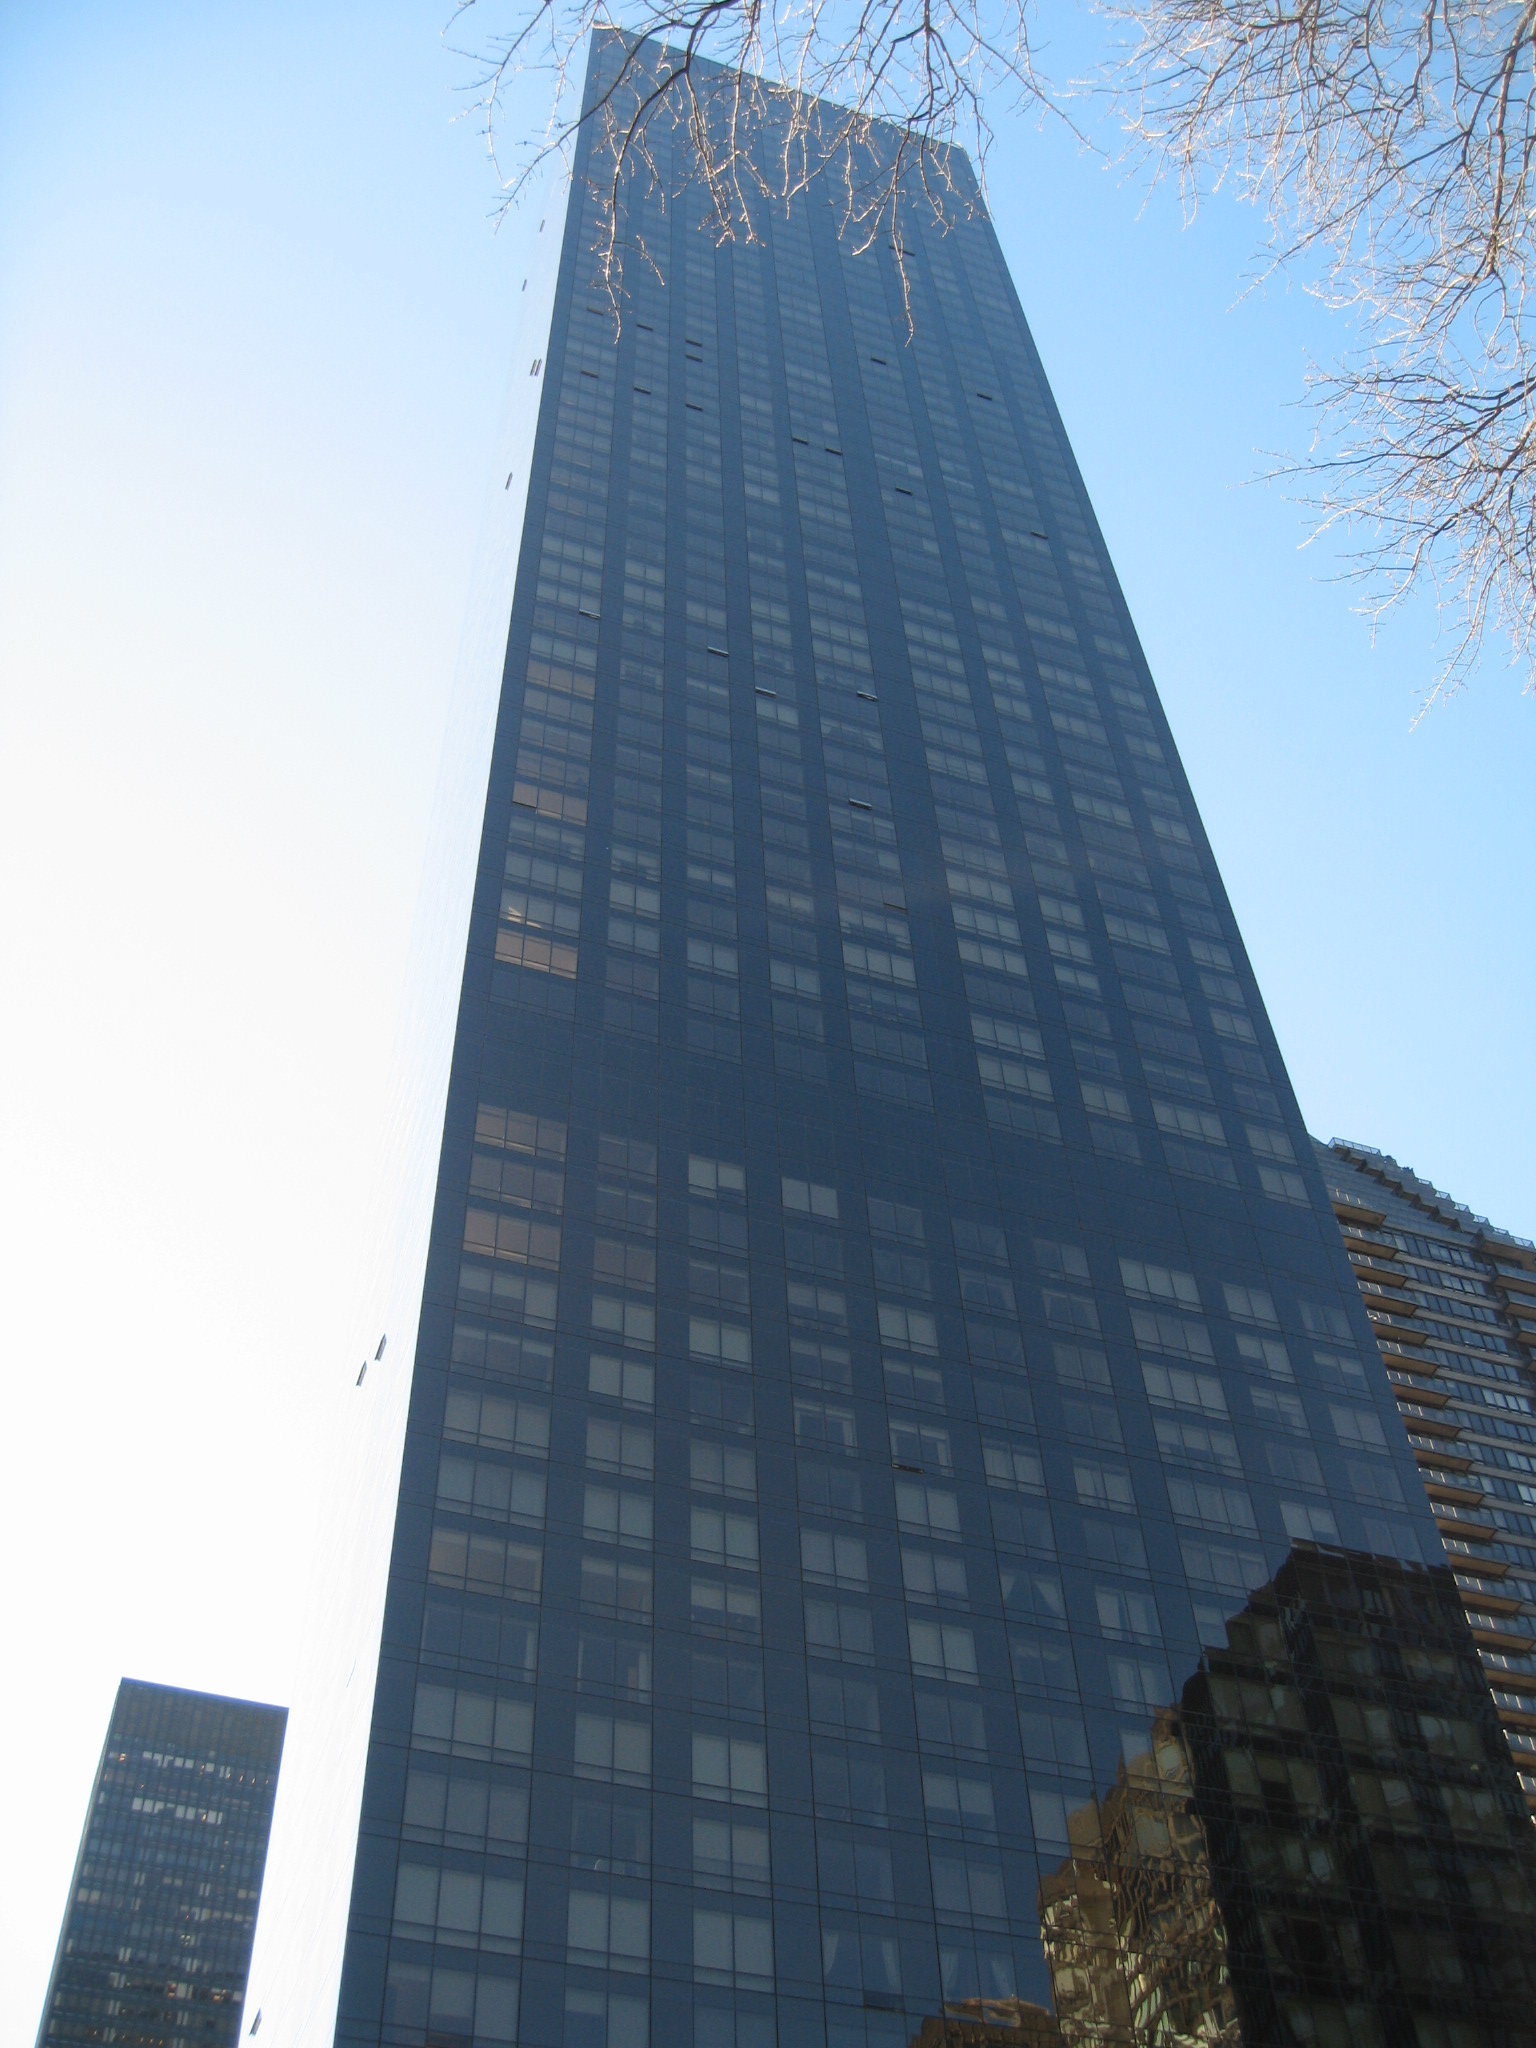 Trump Tower - Wikipedia